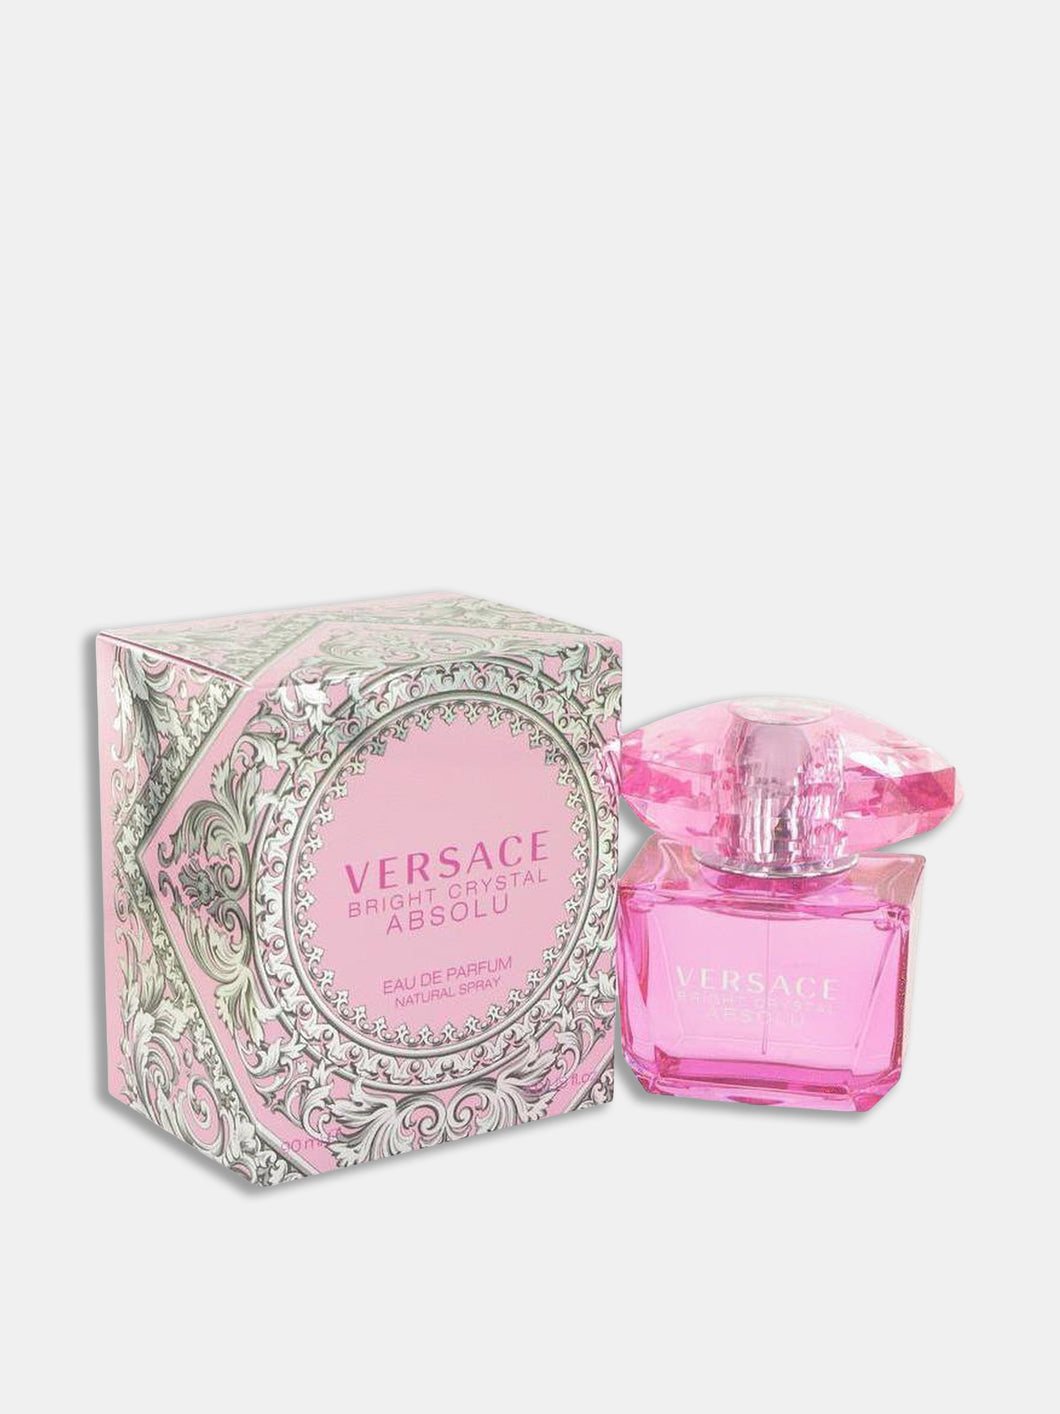 Bright Crystal Absolu by Versace Eau De Parfum Spray 3 oz